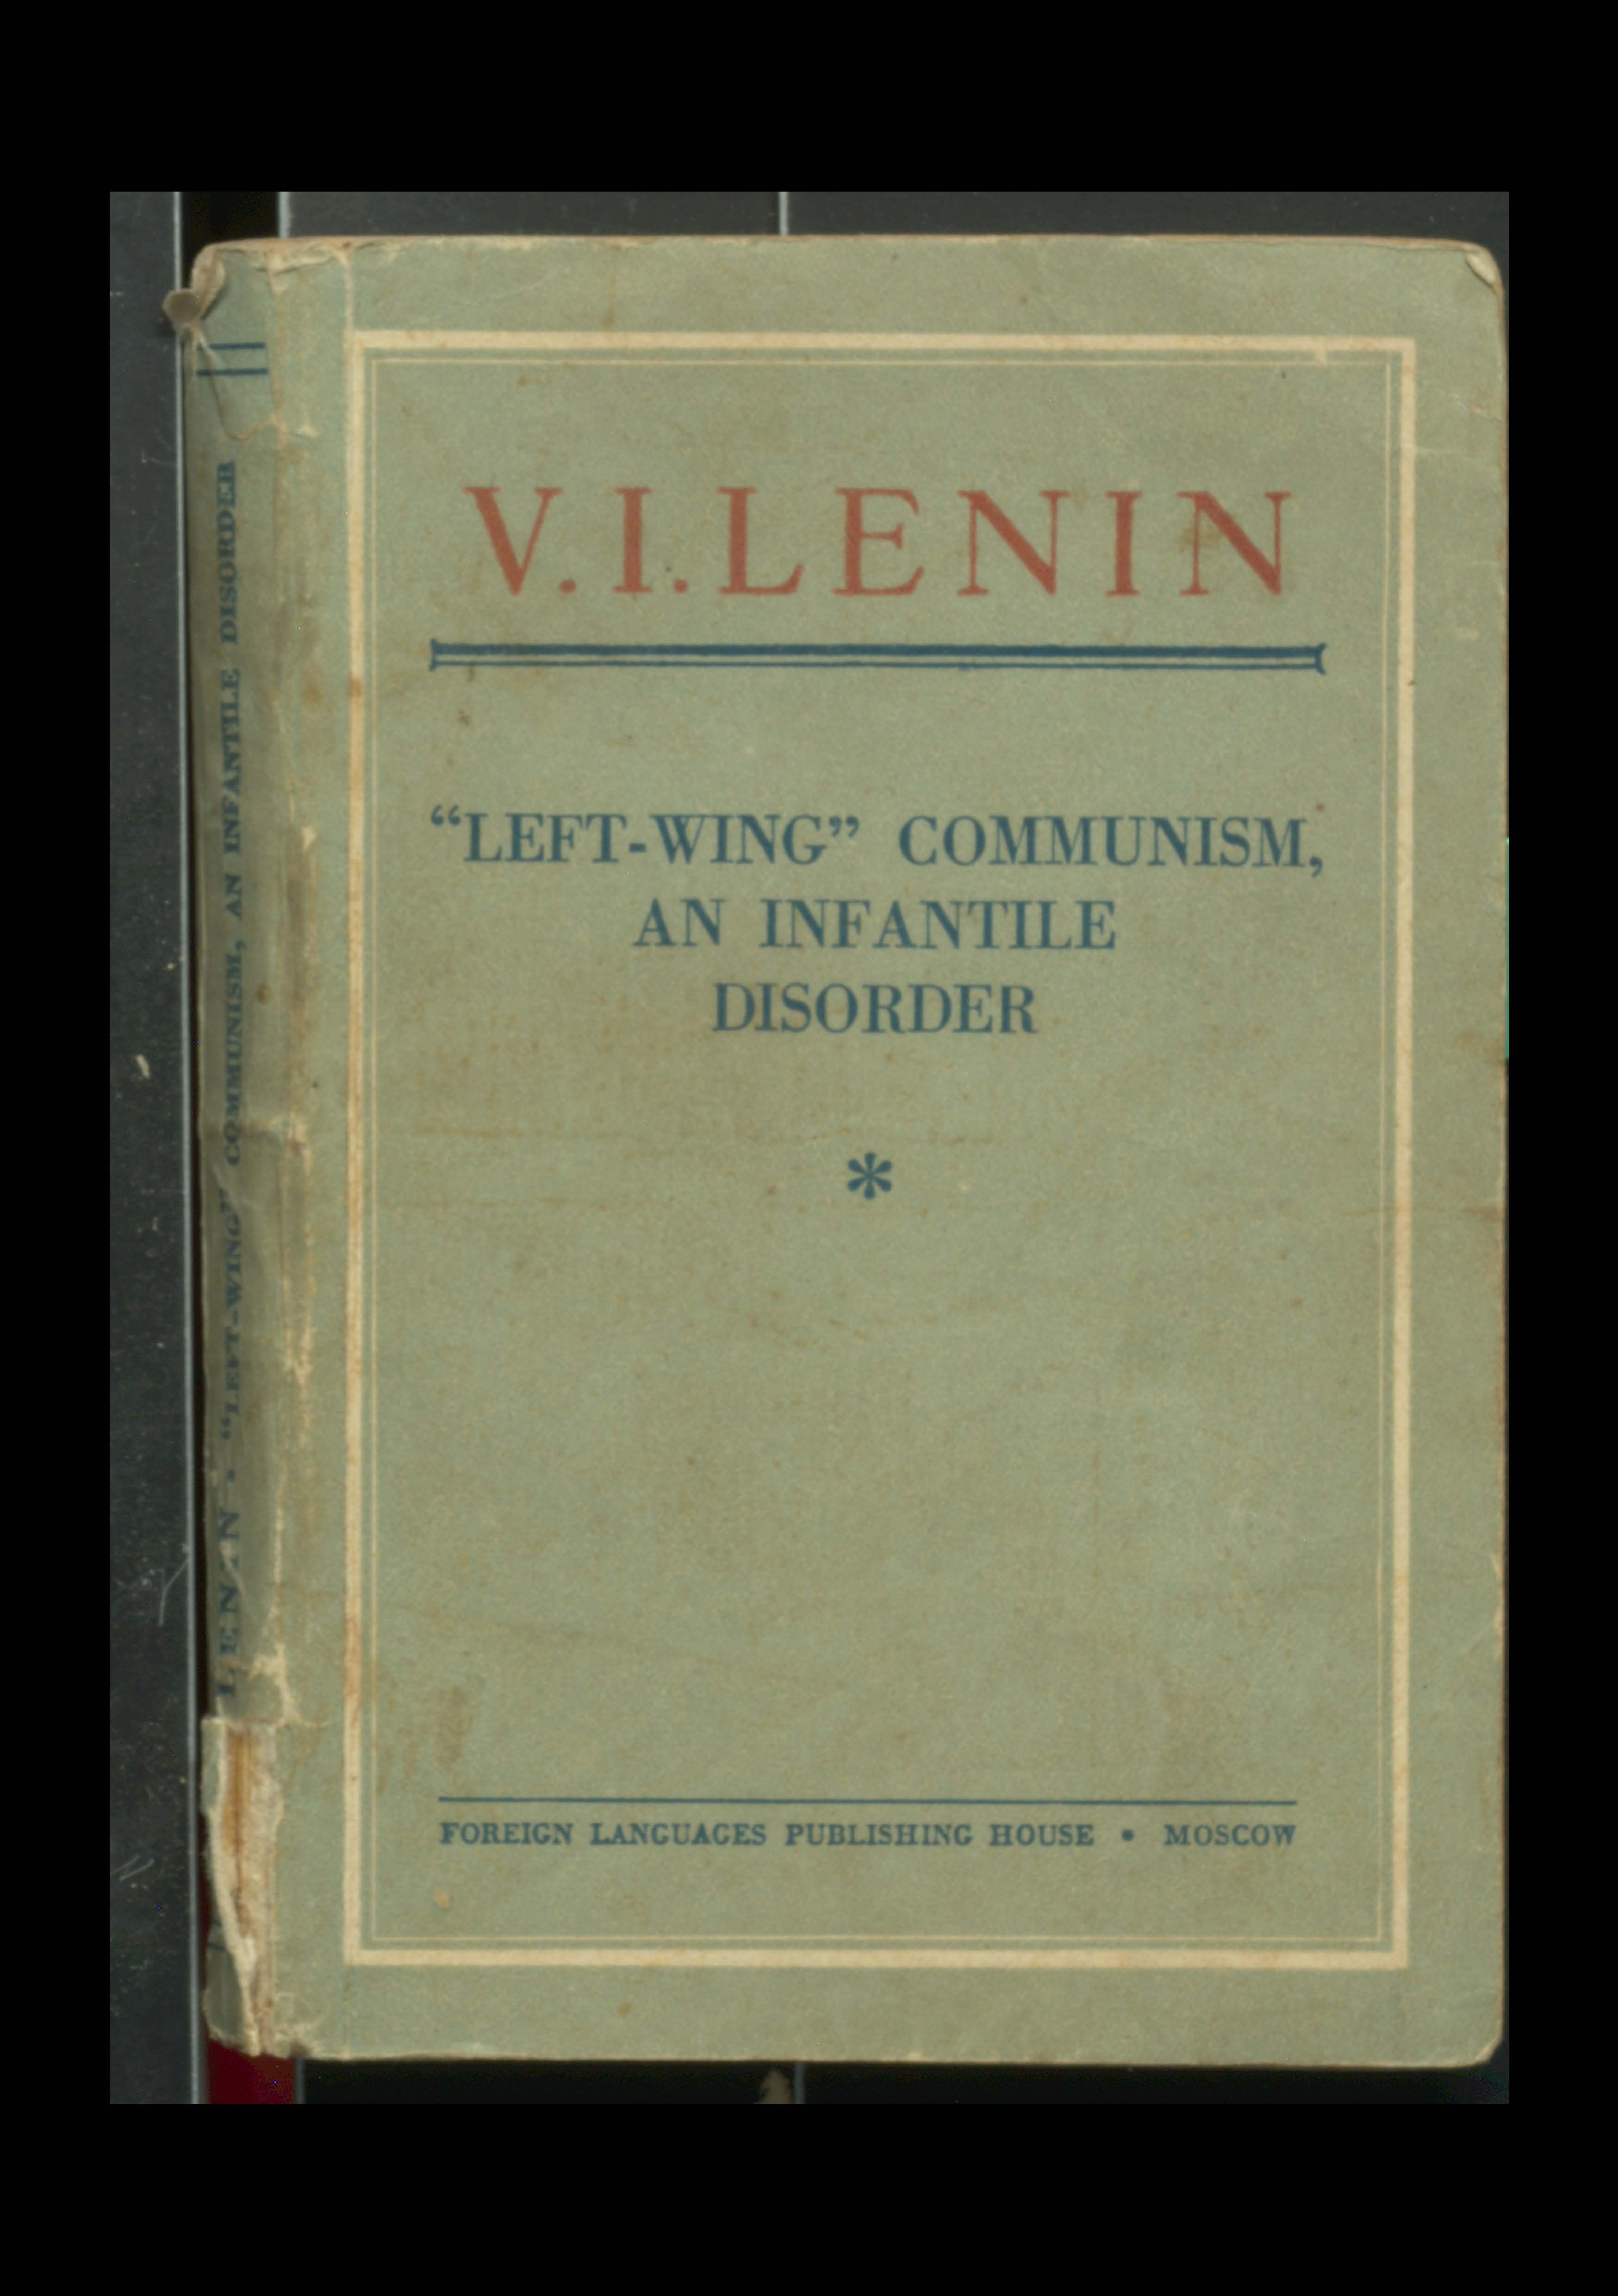 V.L.Lenin "left-wing" communism,an infantile disorder